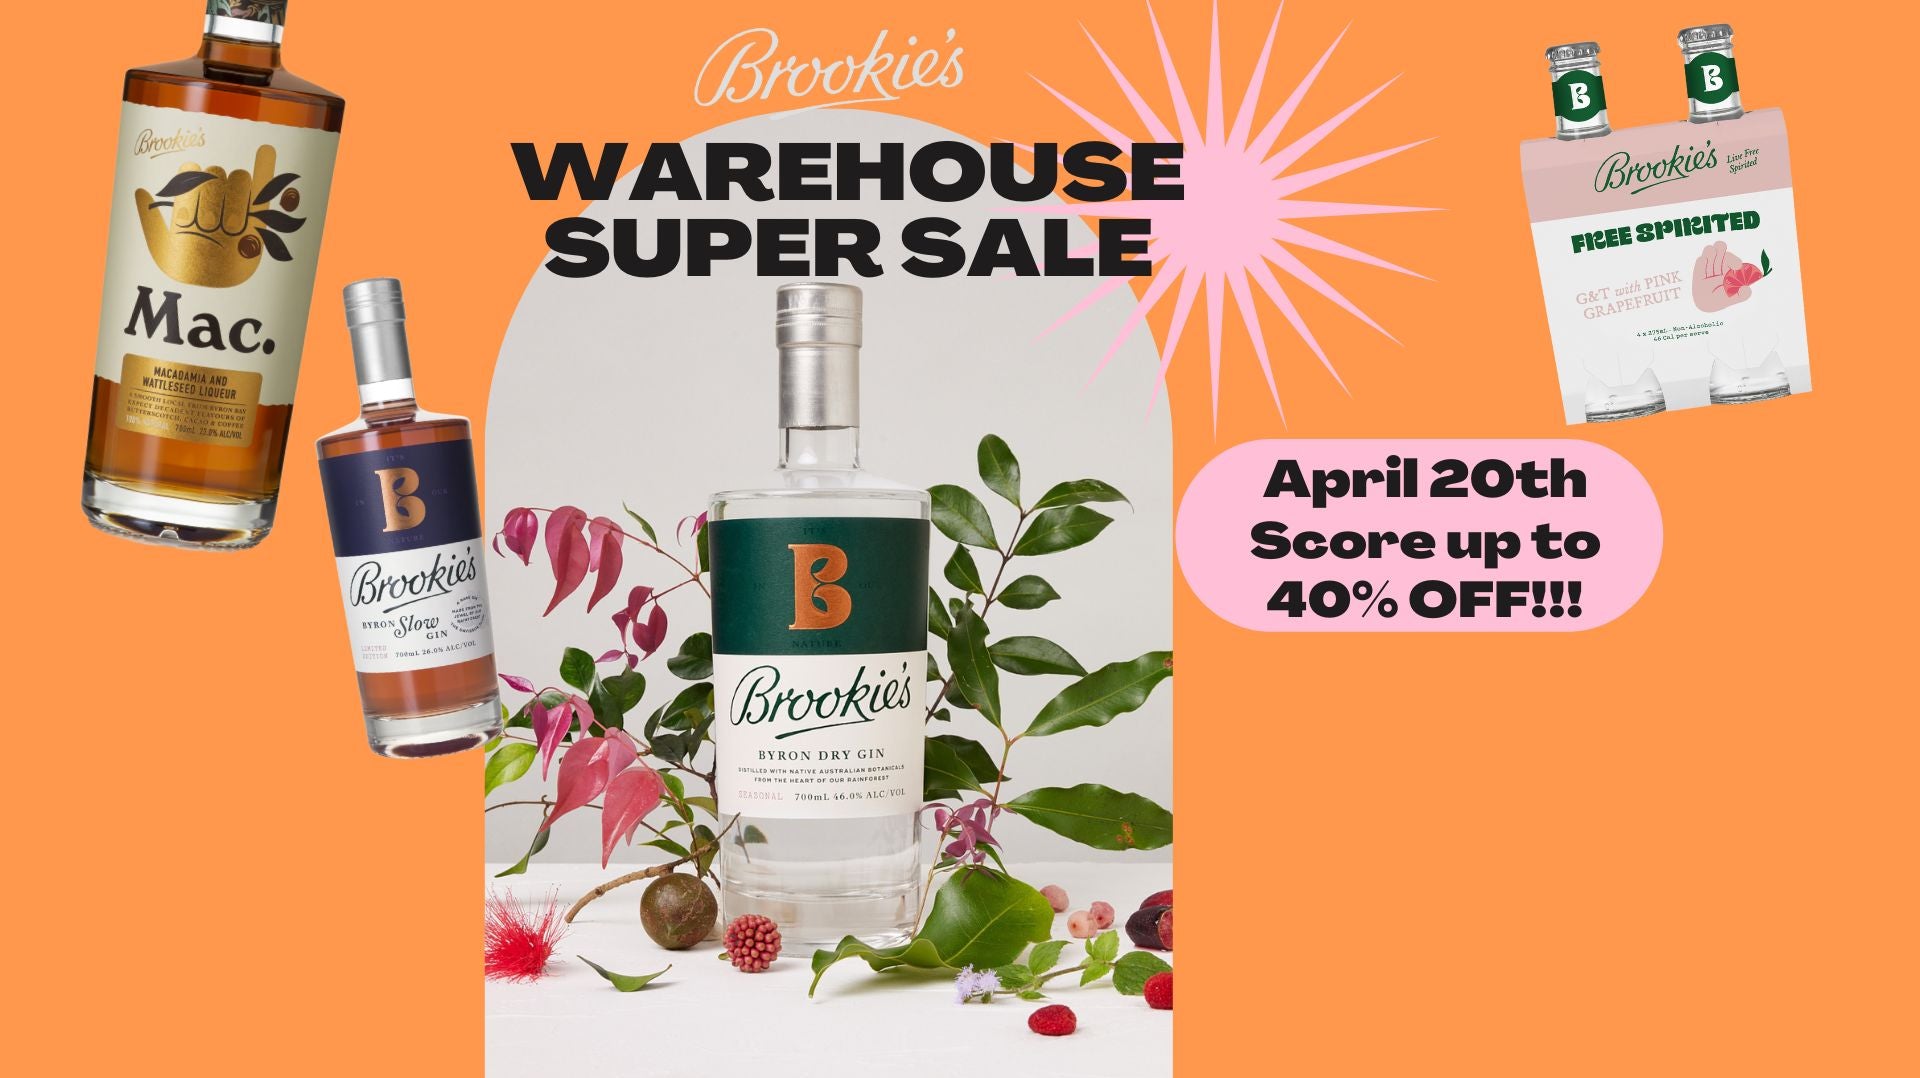 Brookie's warehouse super sale